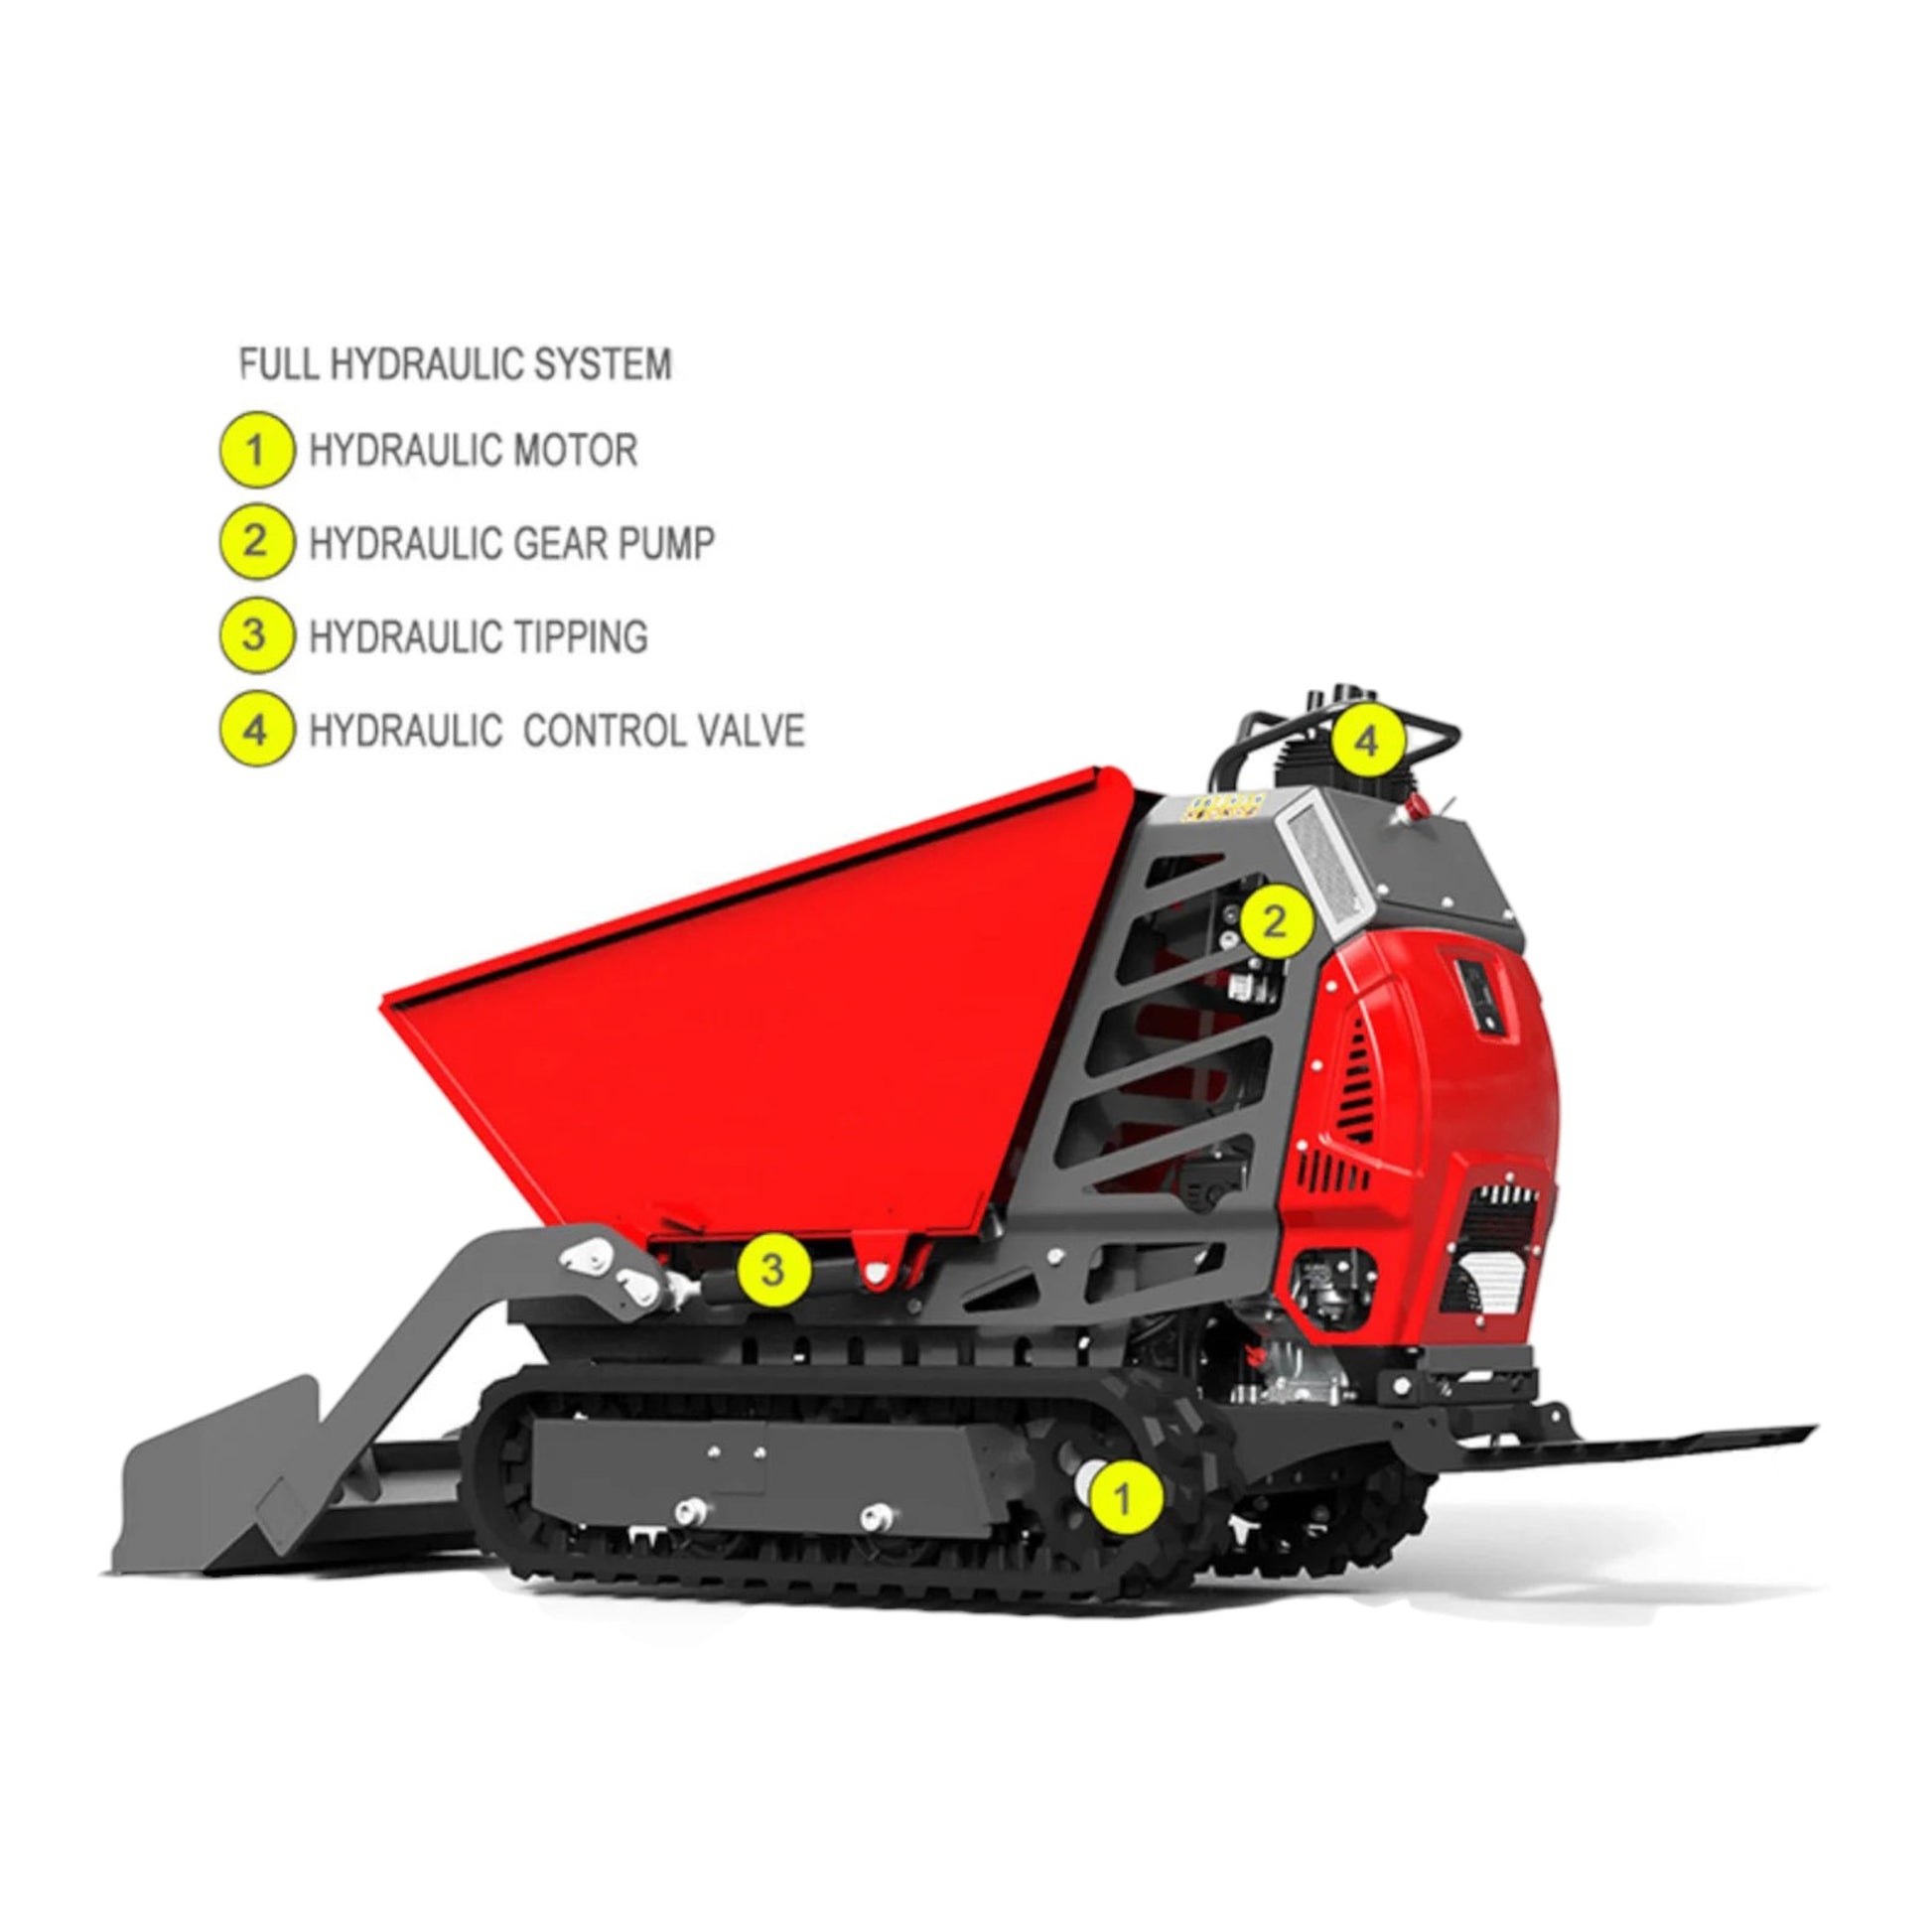 HOCT50FL Vanguard Track Dumper Loader 500 kg (1102 lb) Load Capacity